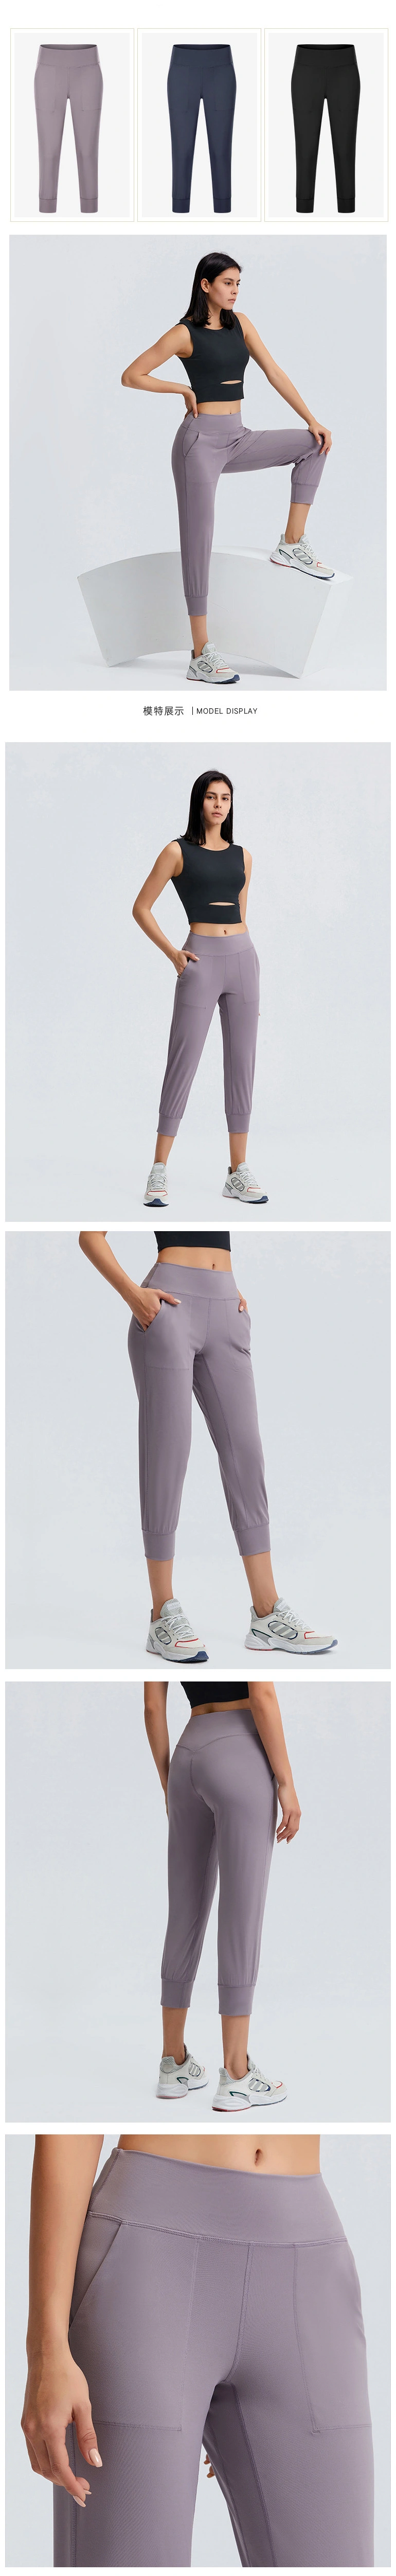 Wholesale Sports Yoga Wear Apparel Gym Legging Activewear Workout Clothes Drawstring Yoga Pants with Pocket